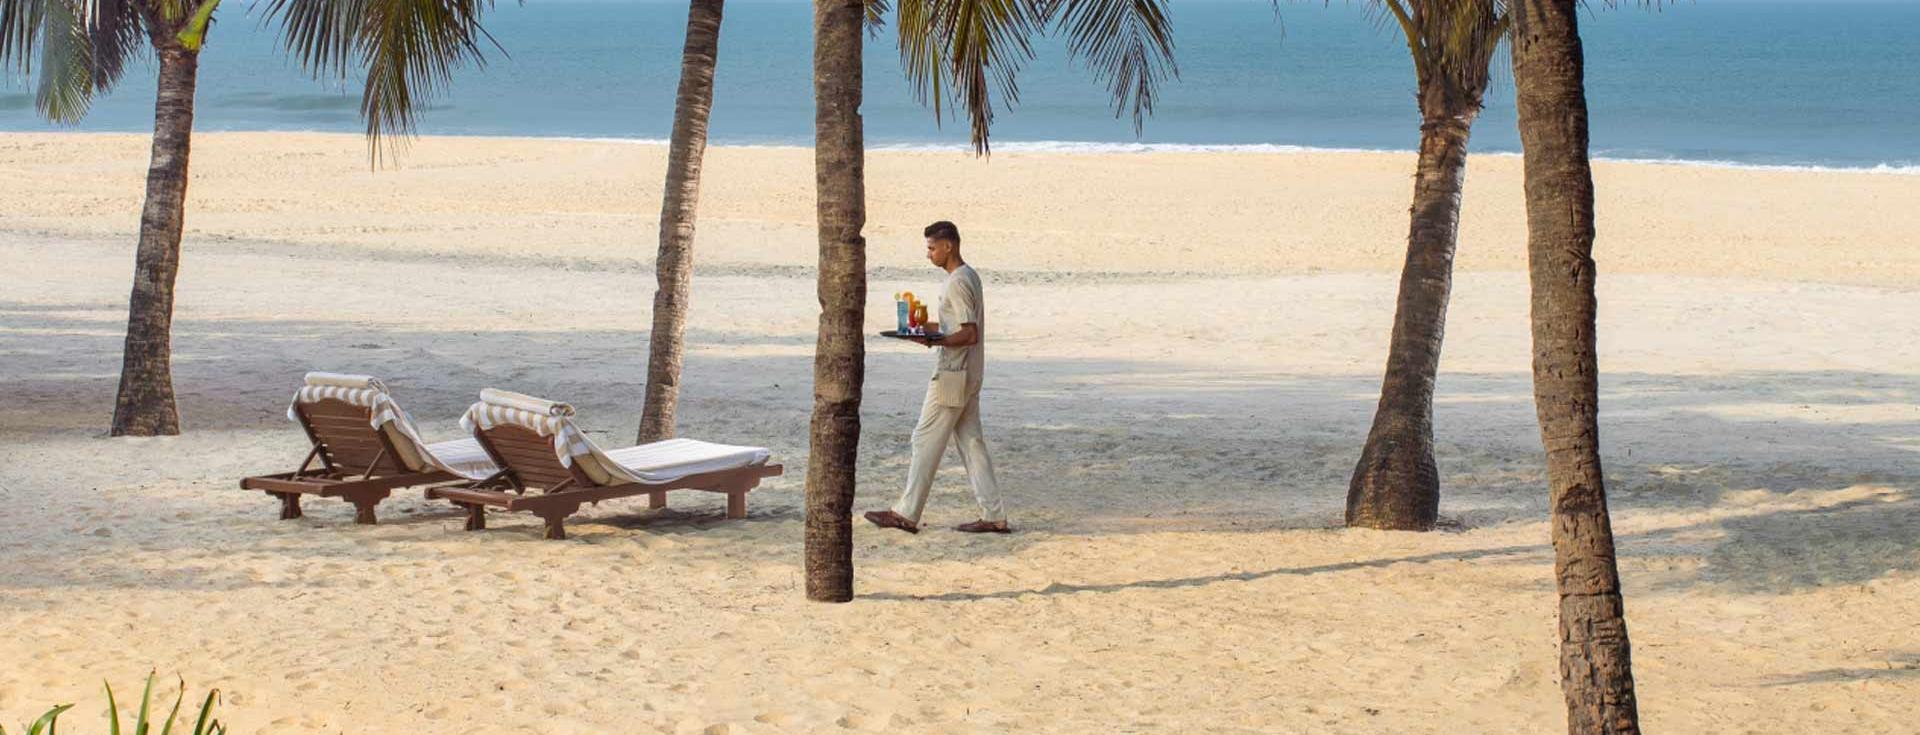 The beach countdown listing down the top sandy spots in Goa